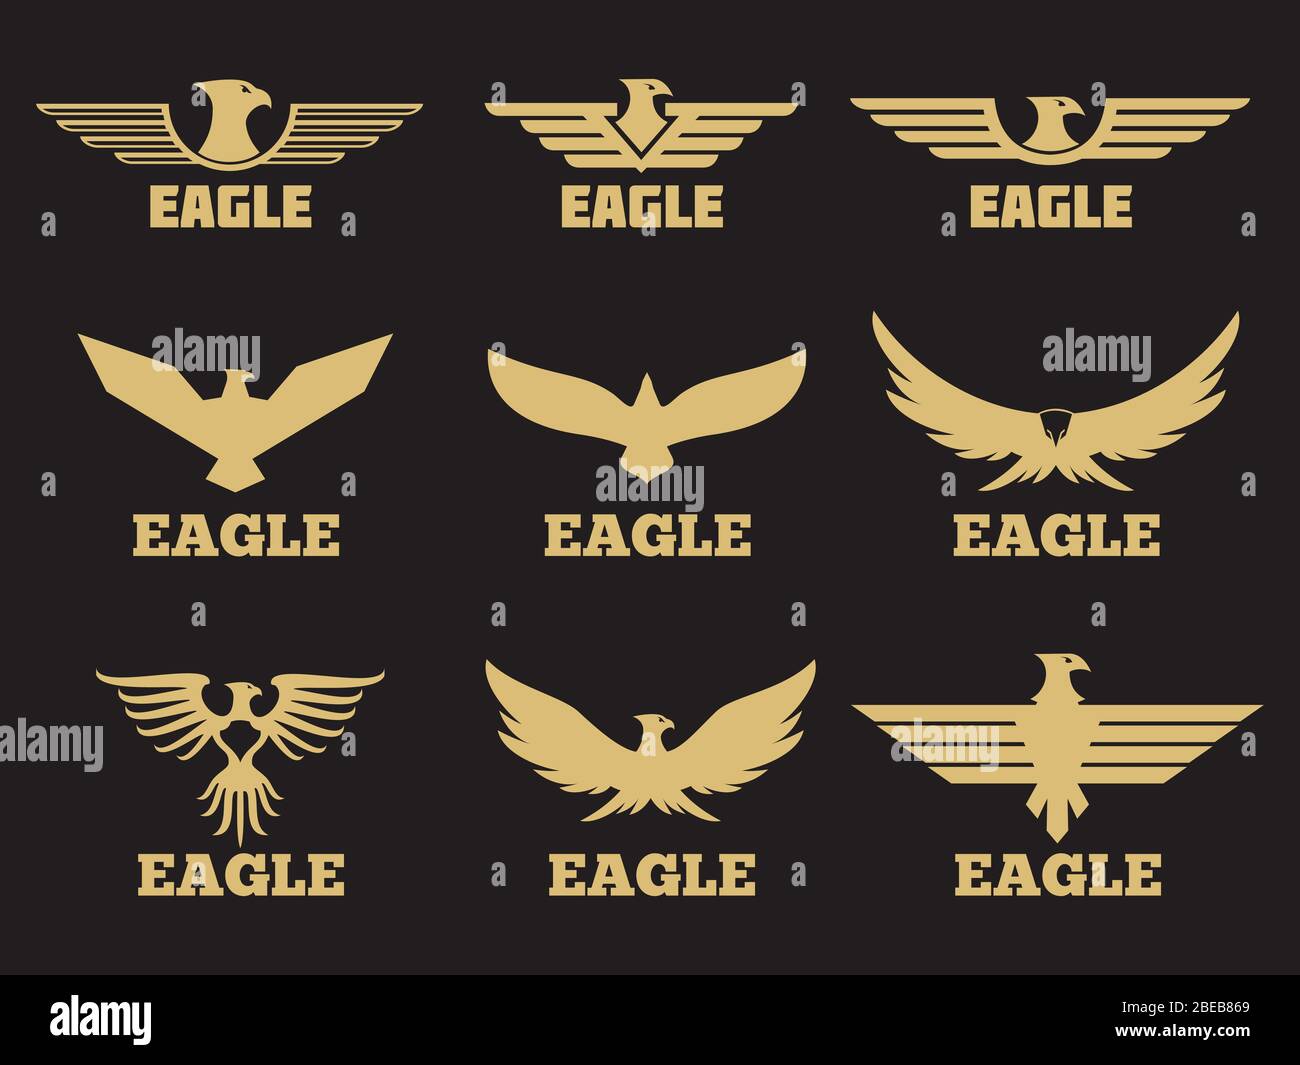 Logo de águilas fotografías e imágenes de alta resolución - Alamy